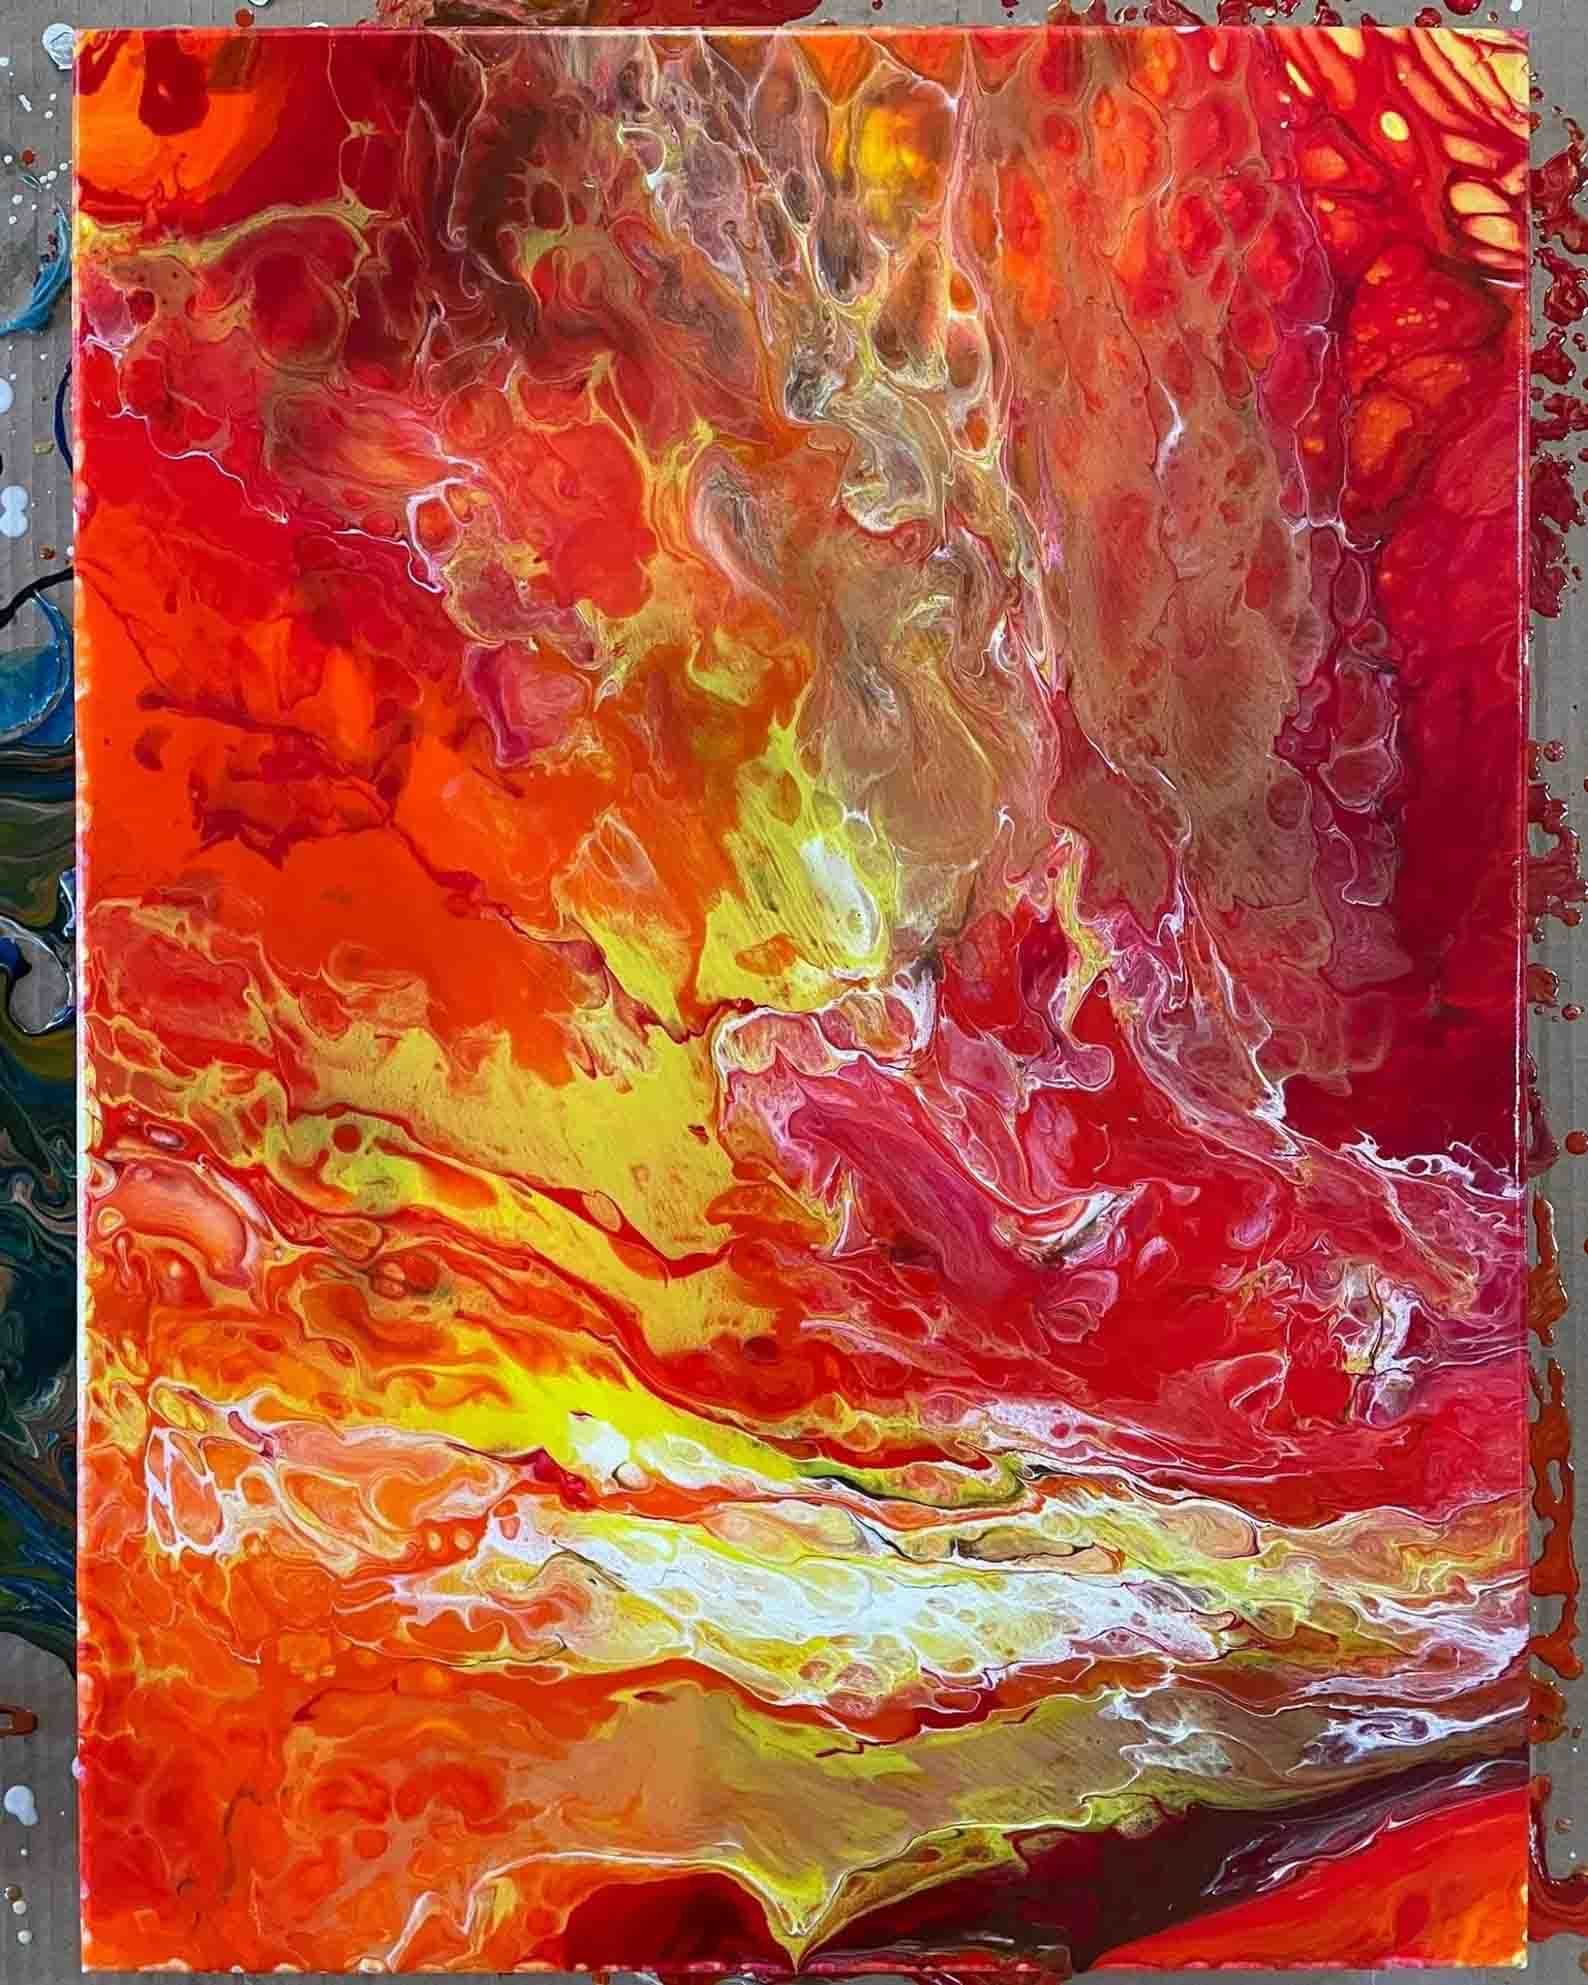 18x24 Original Abstract Canvas Art Acrylic Pour Painting "Fire Mountain" / Original Acrylic Painting / Abstract Painting / Fluid Art